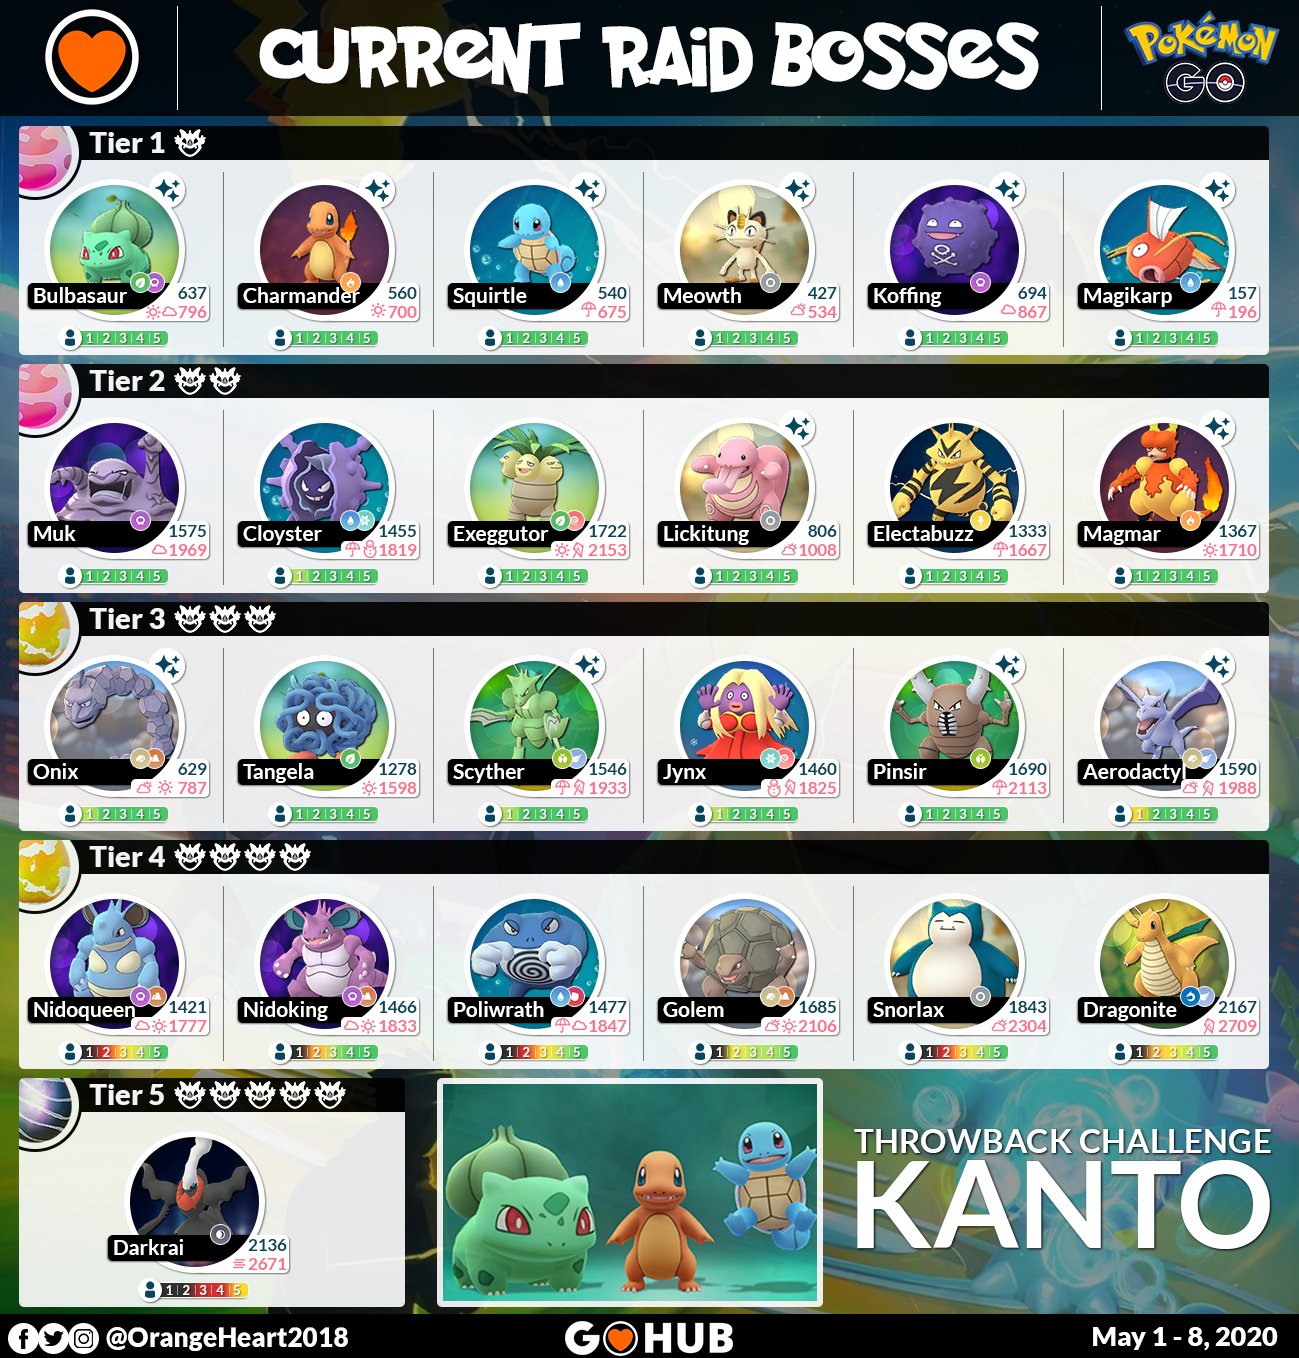 Pokémon Go Kanto Throwback Challenge event guide - Polygon